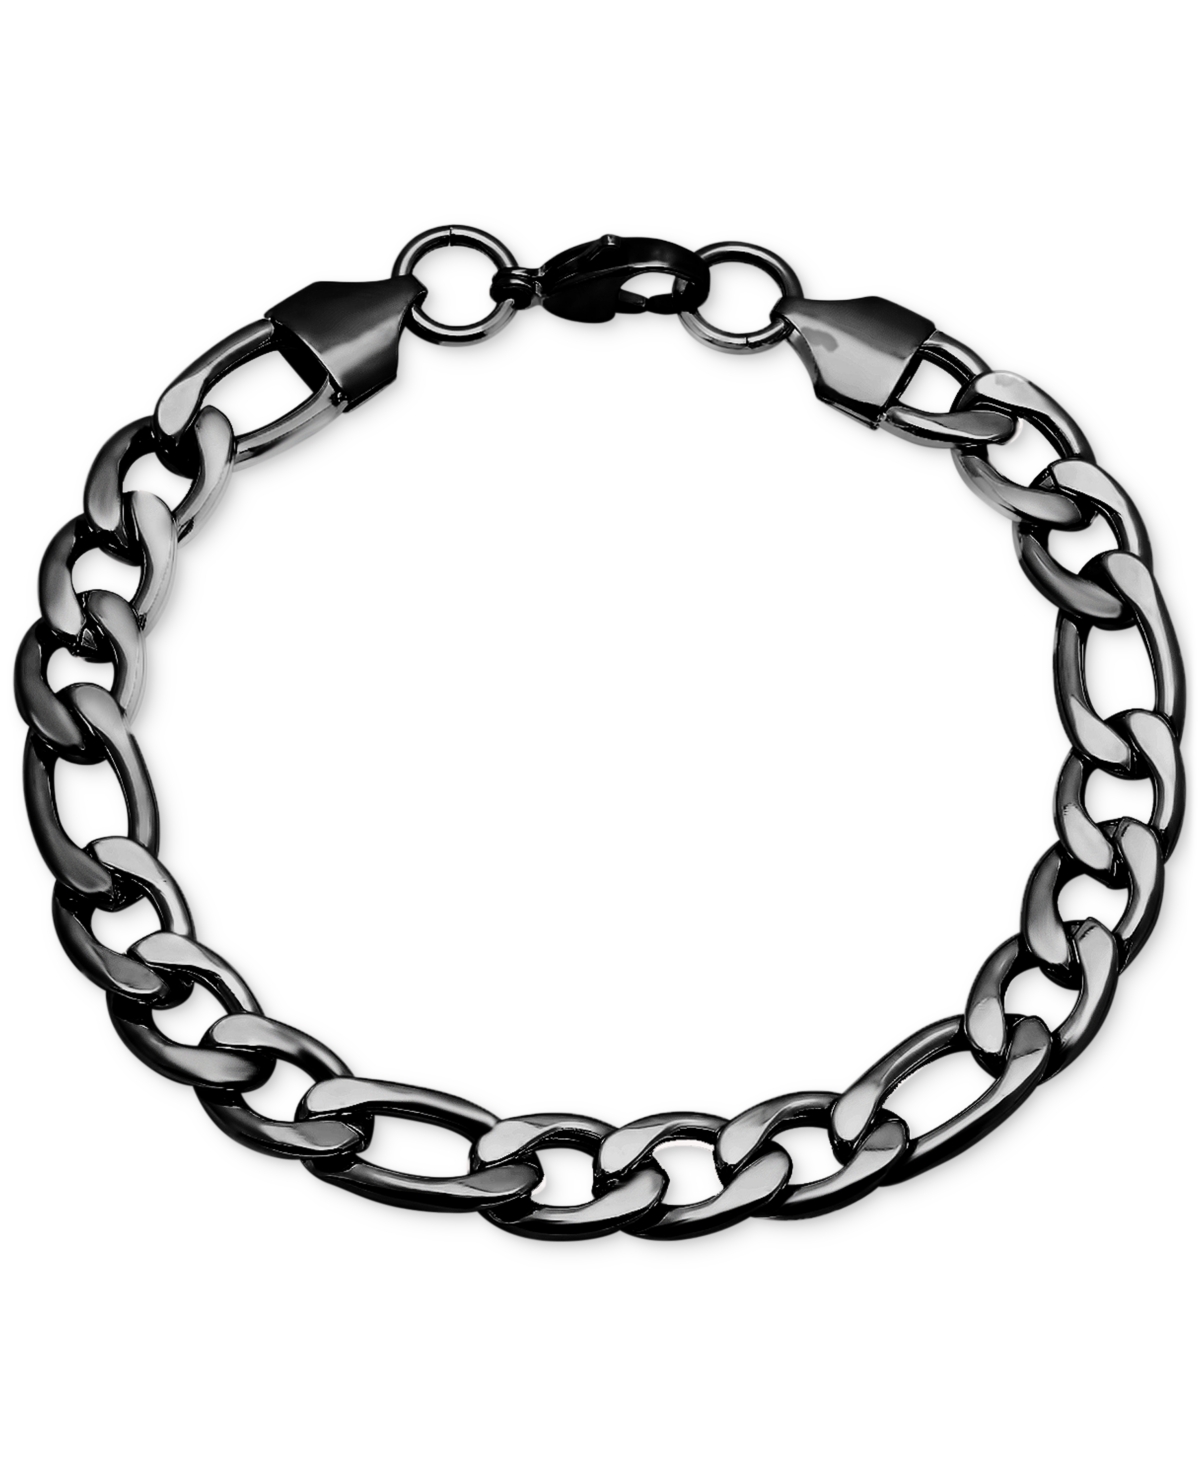 Men's Black Ip Stainless Steel Franco Link Chain Bracelet - Black